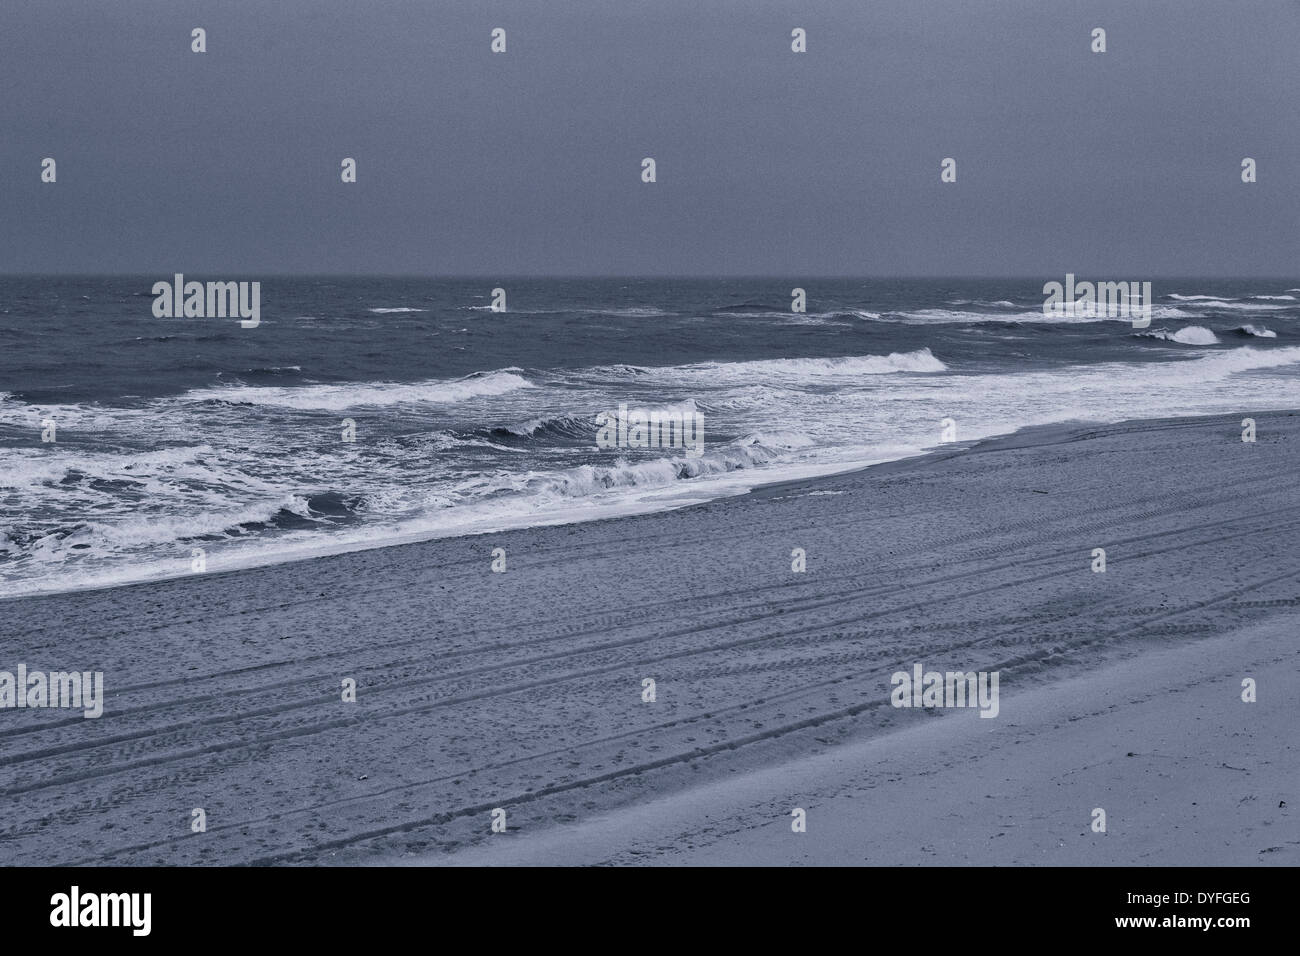 On the beach of Rantum, island of Sylt, Germany Stock Photo